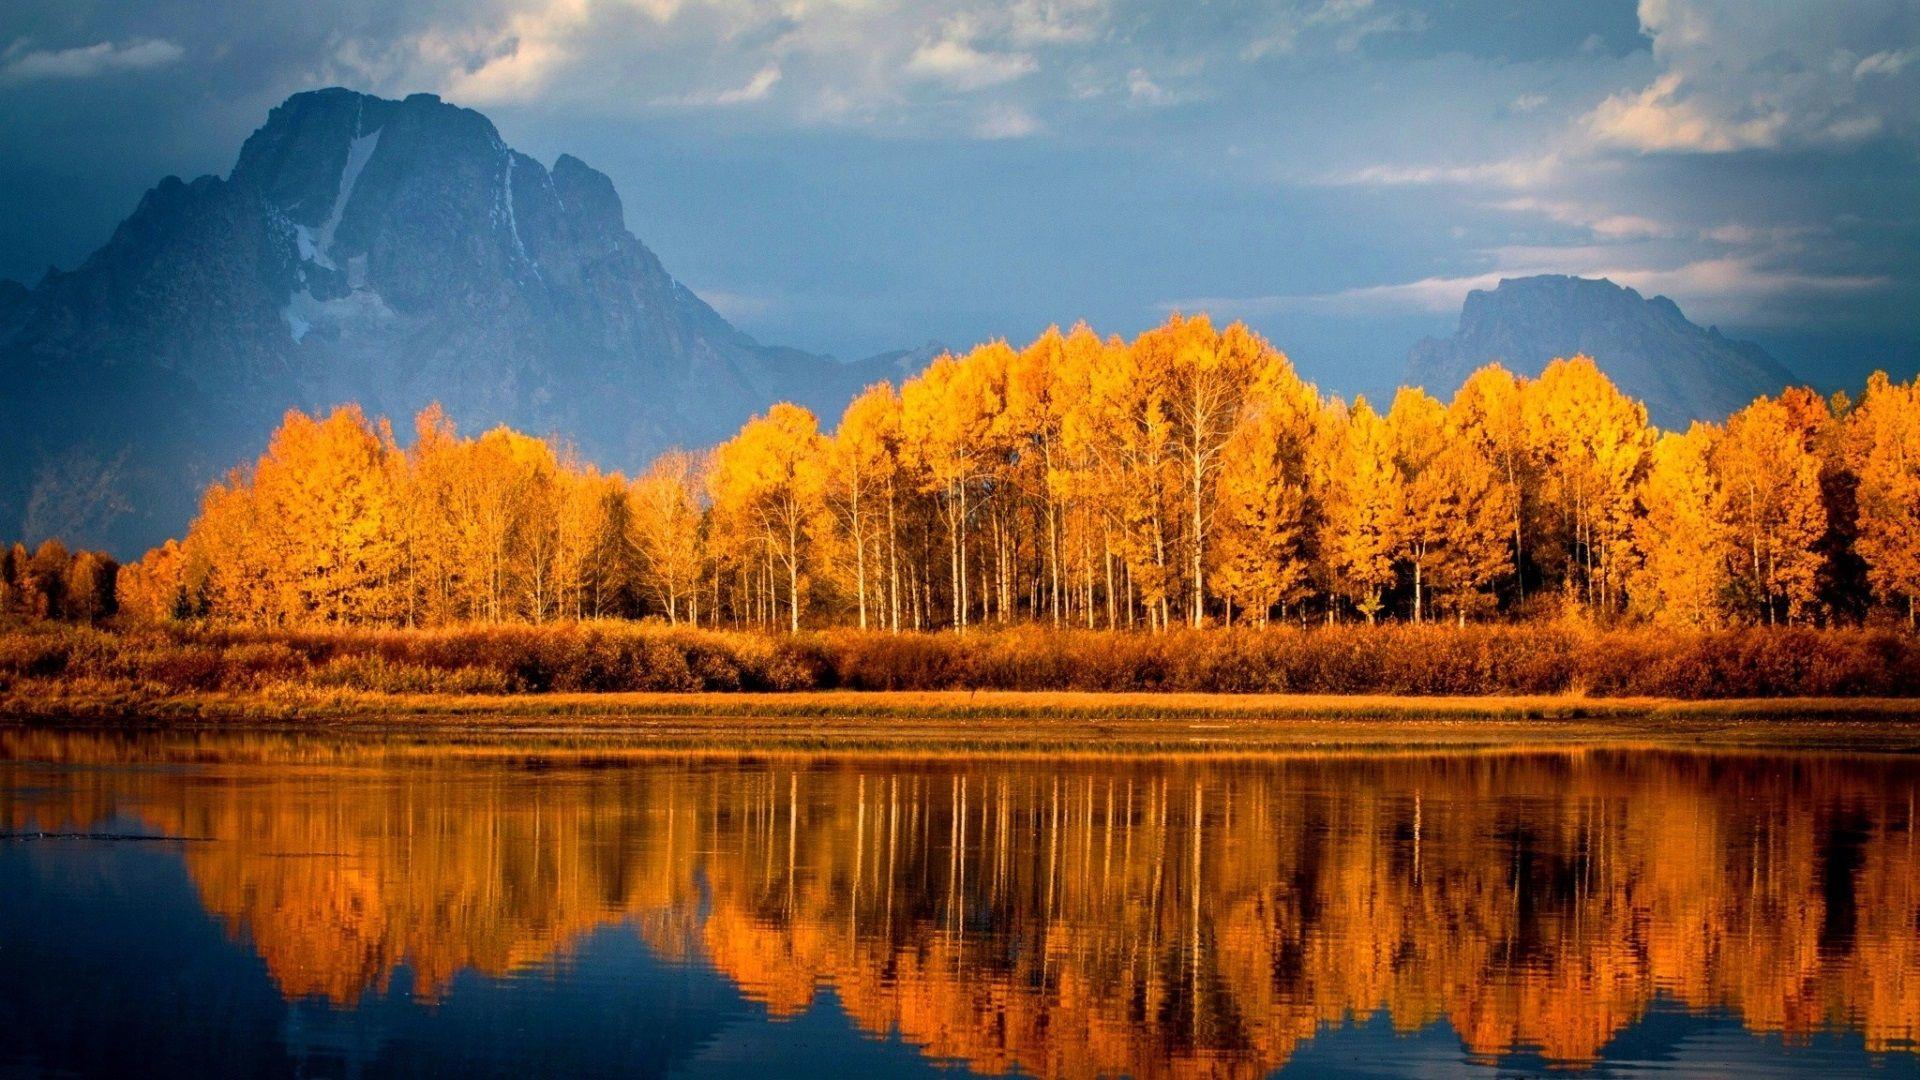 Autumn Mountains Desktop Wallpapers - Top Free Autumn Mountains Desktop ...